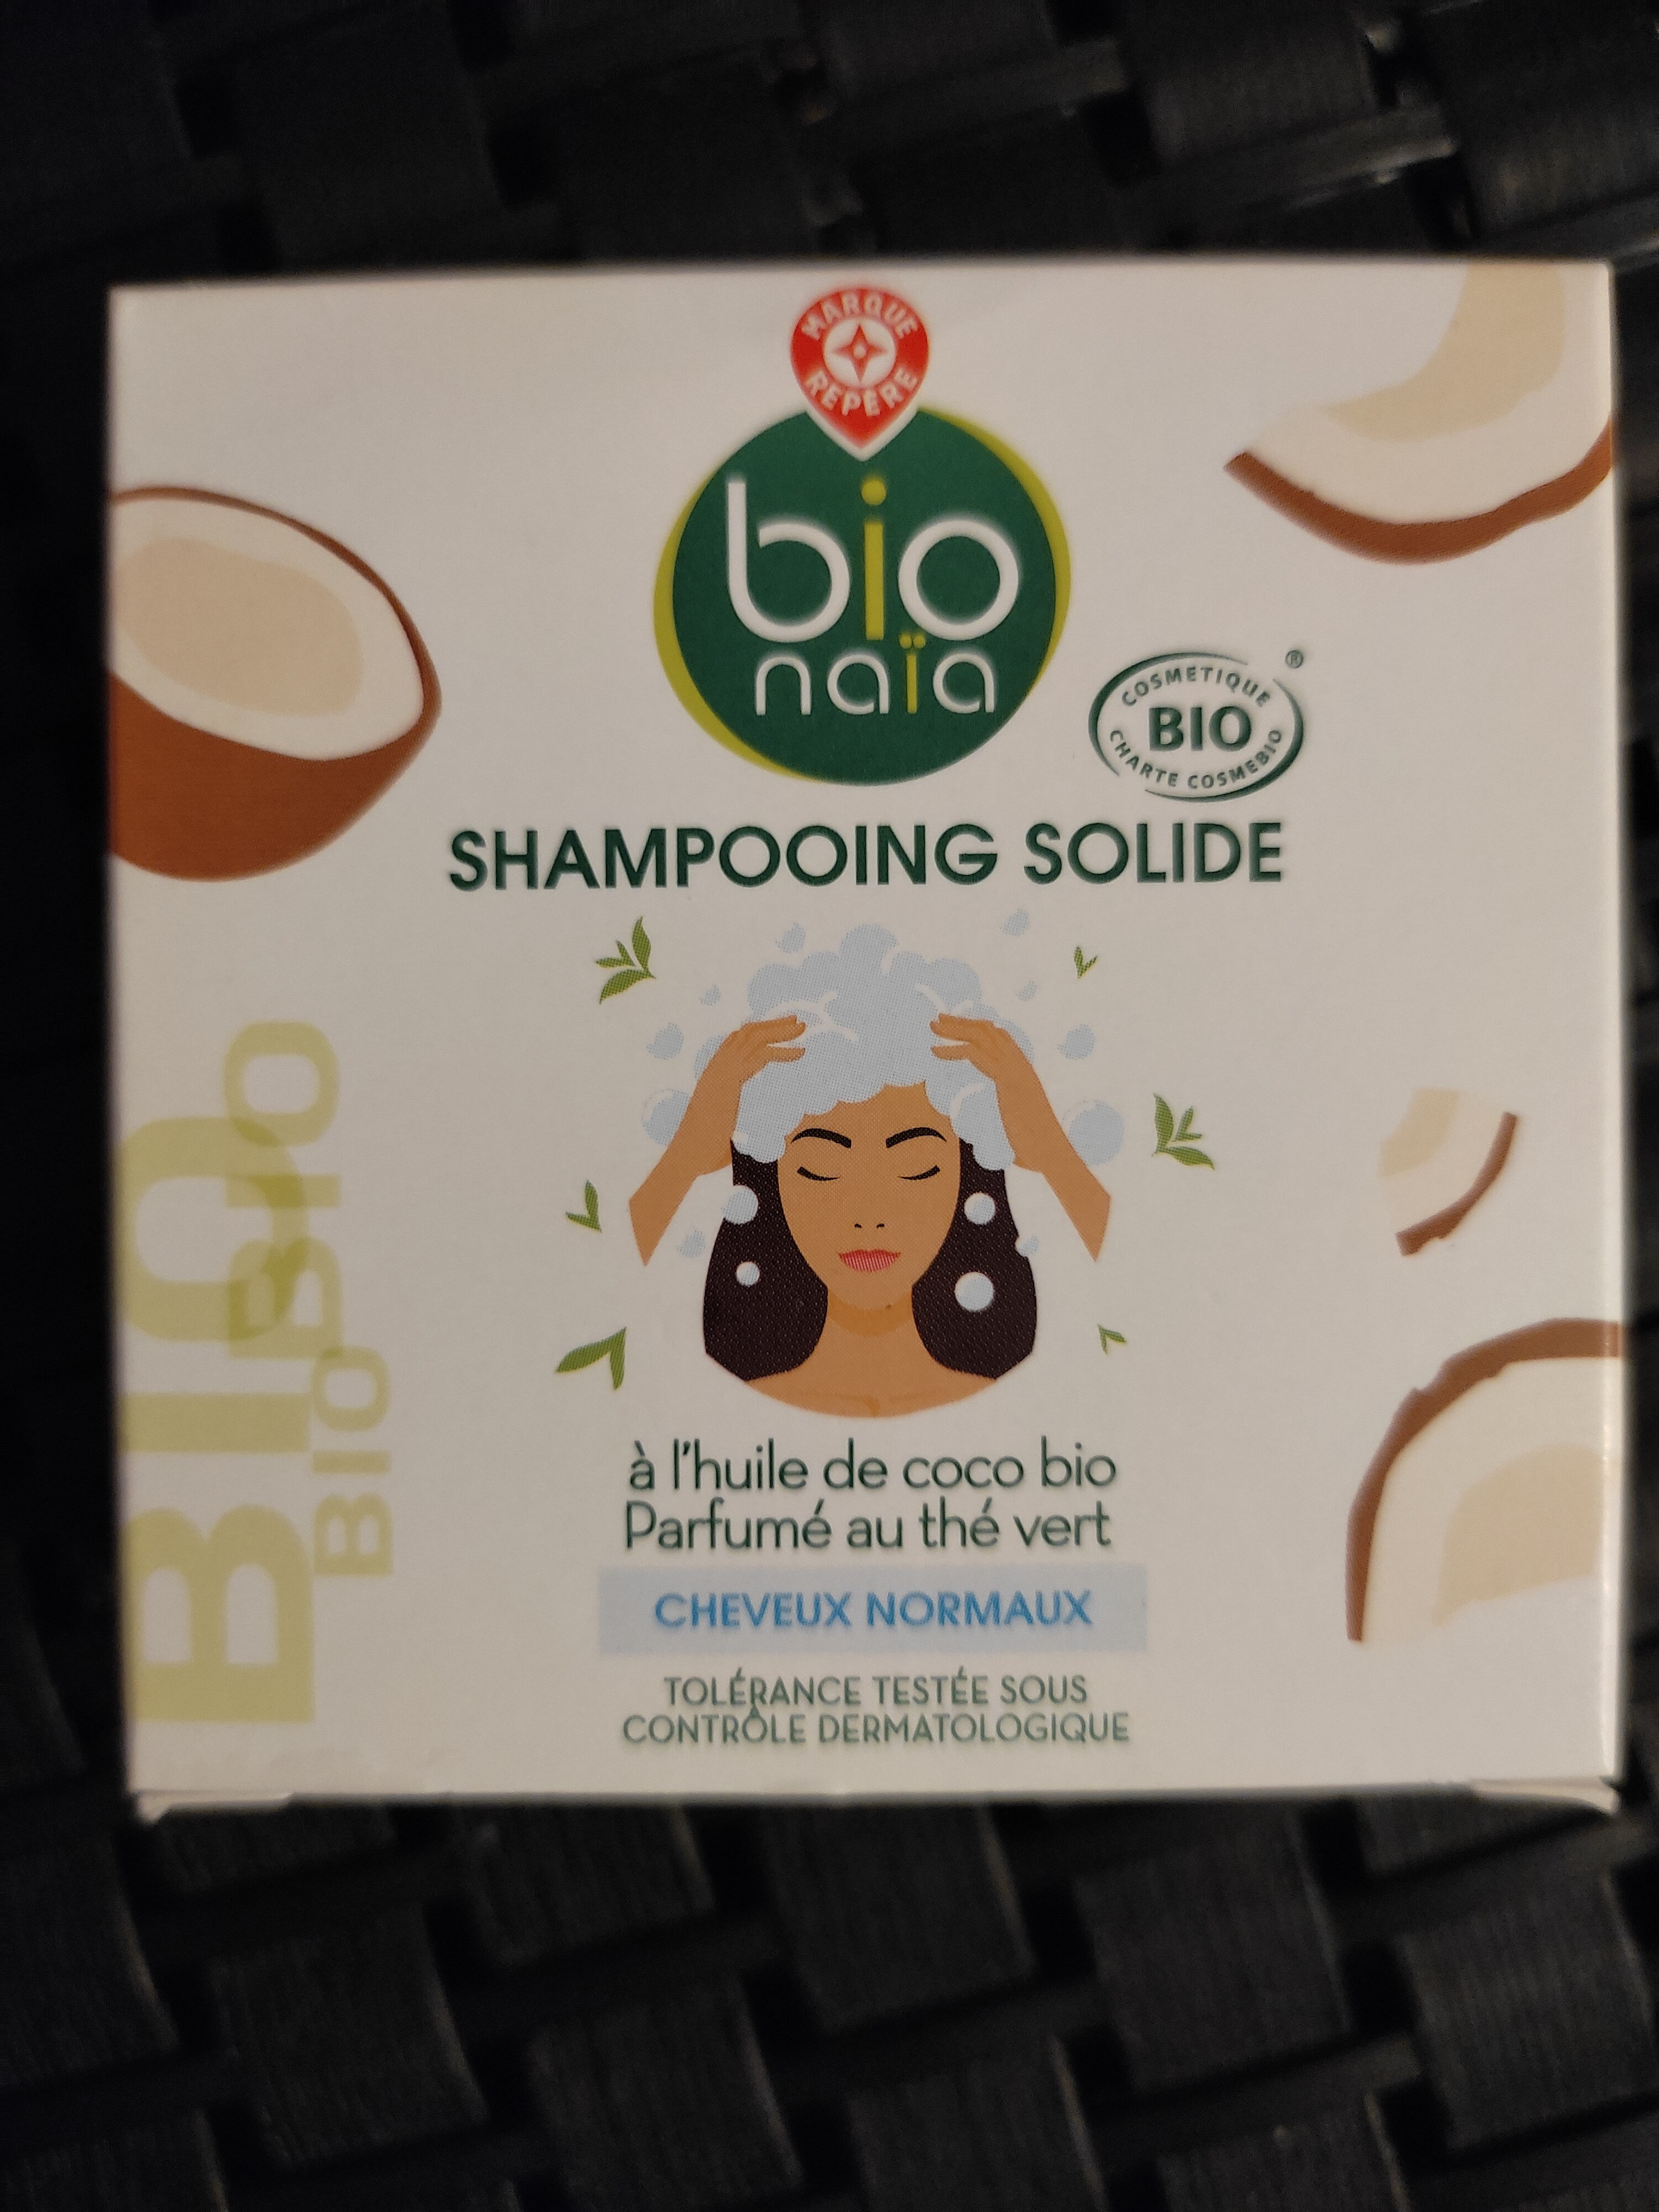 Shampooing solide à l'huile de coco bio - Produto - fr